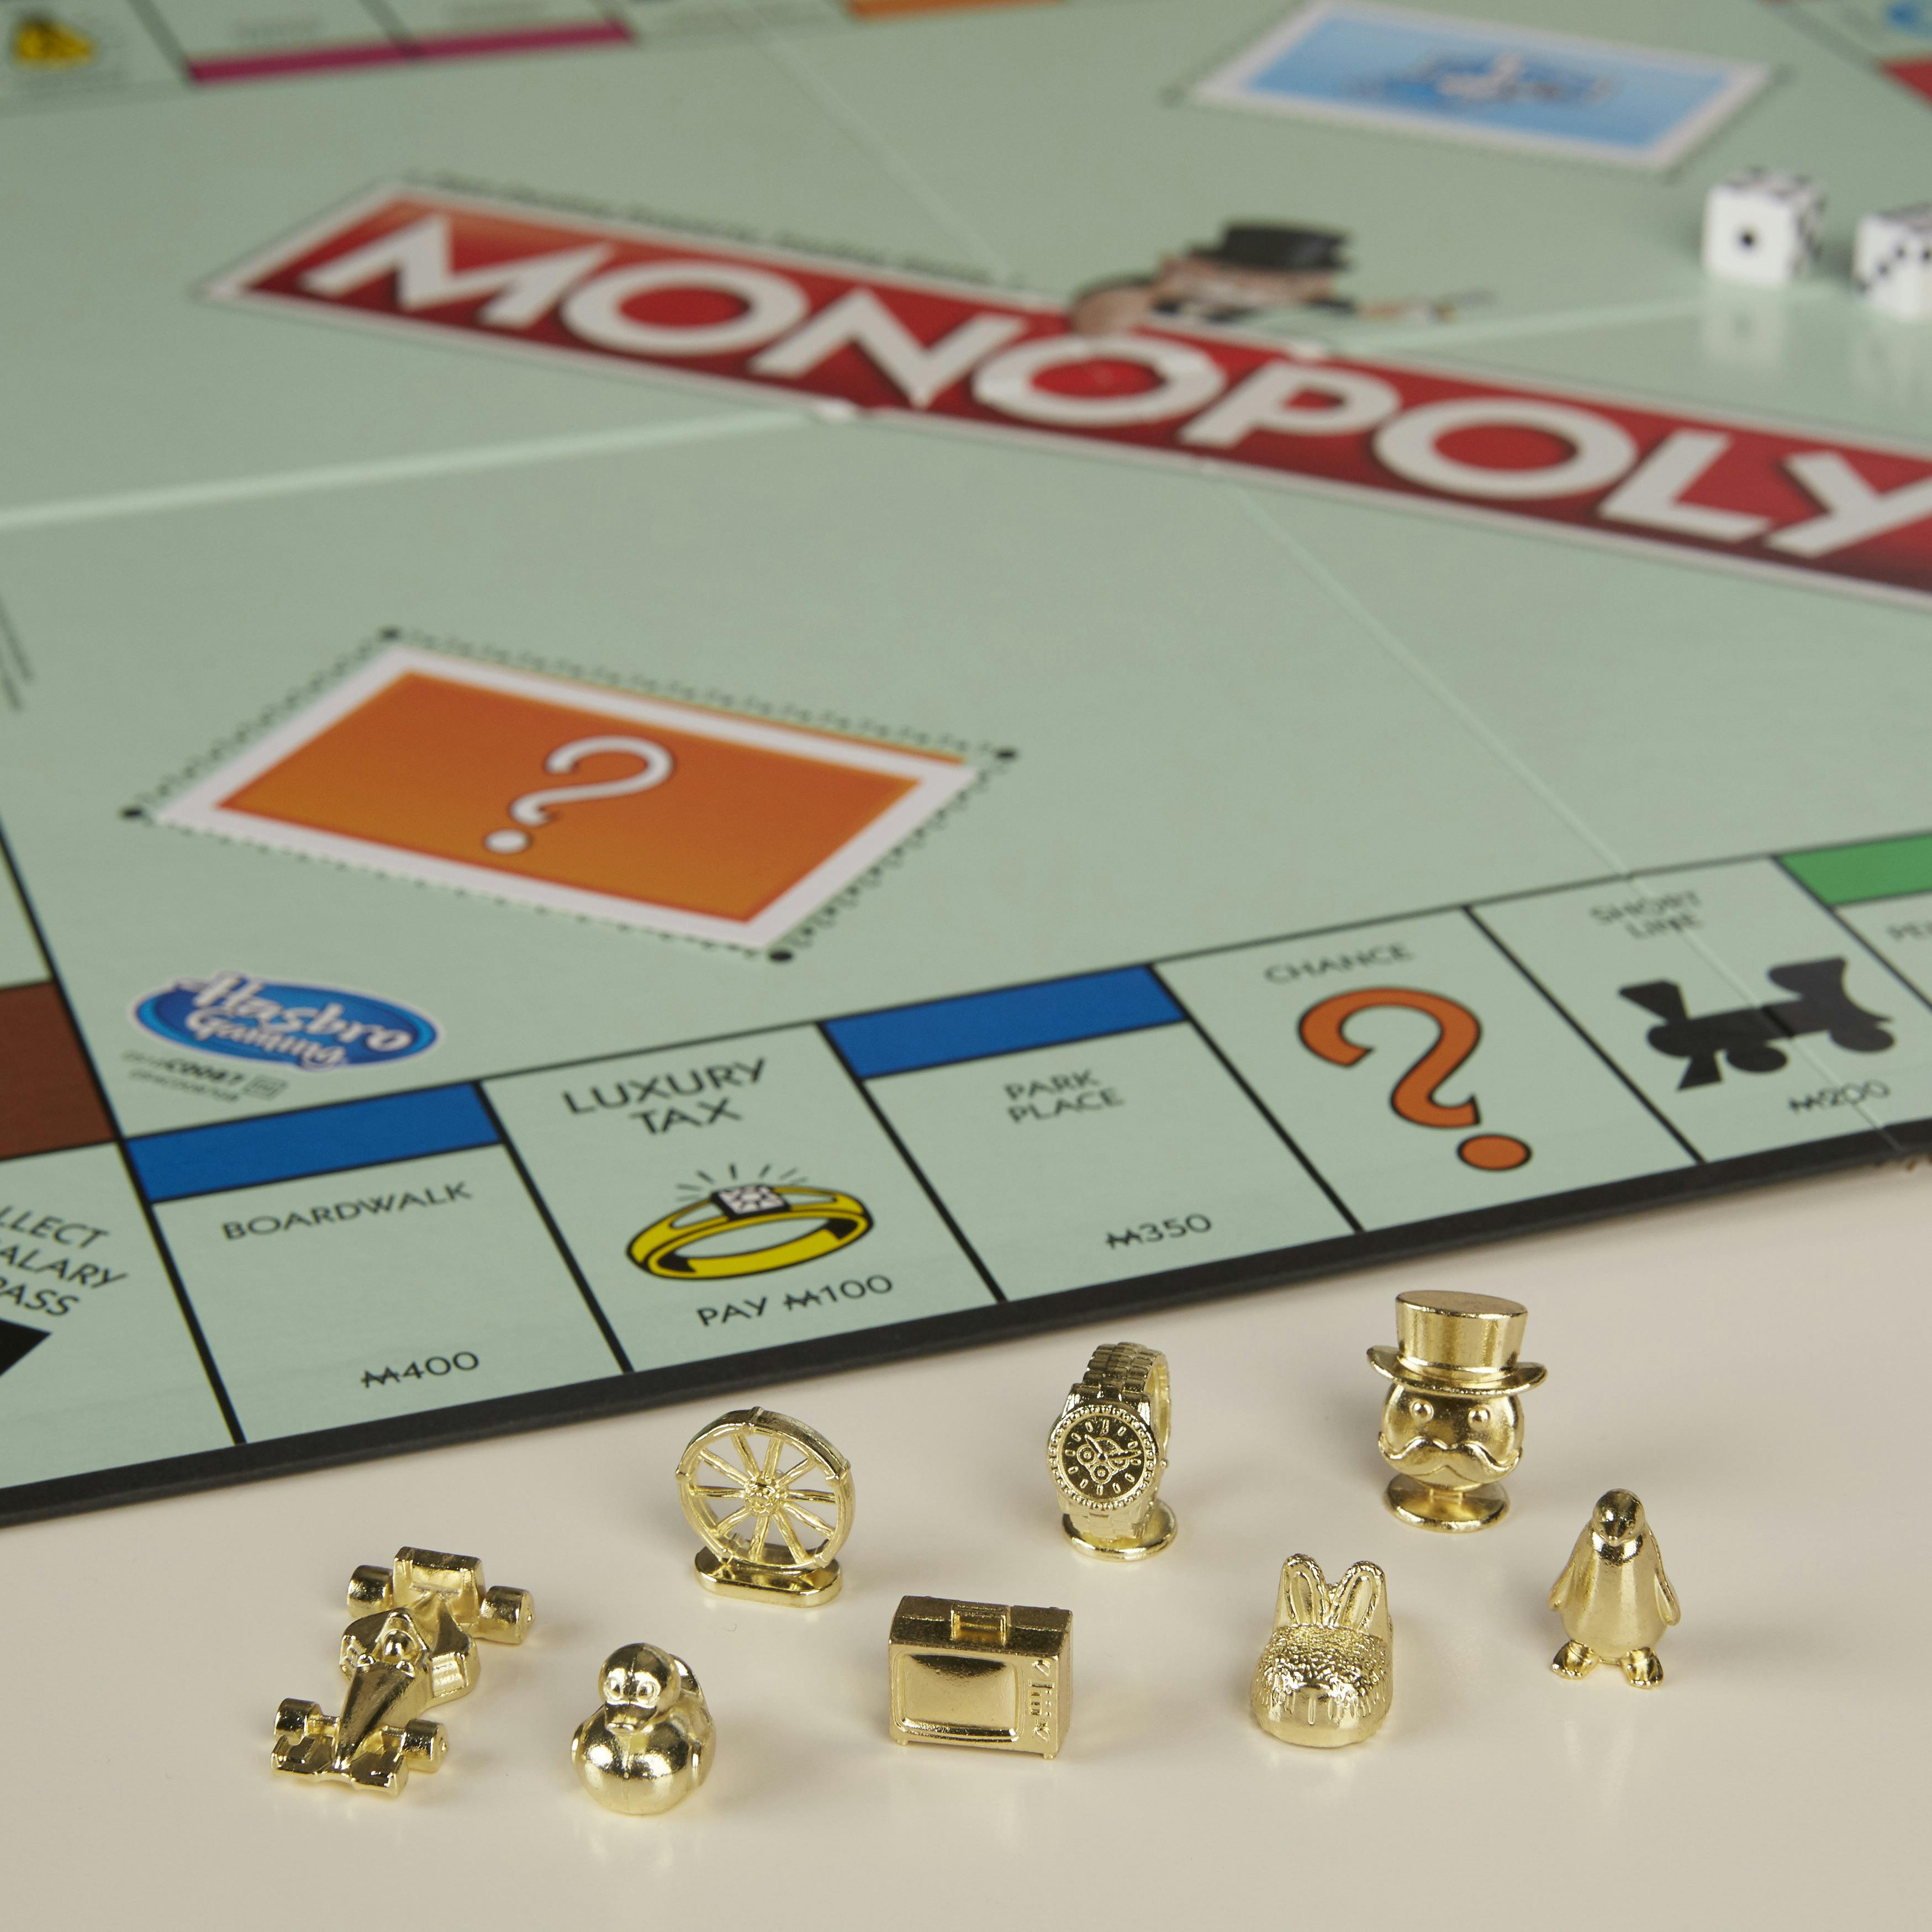 Monopoly tokens